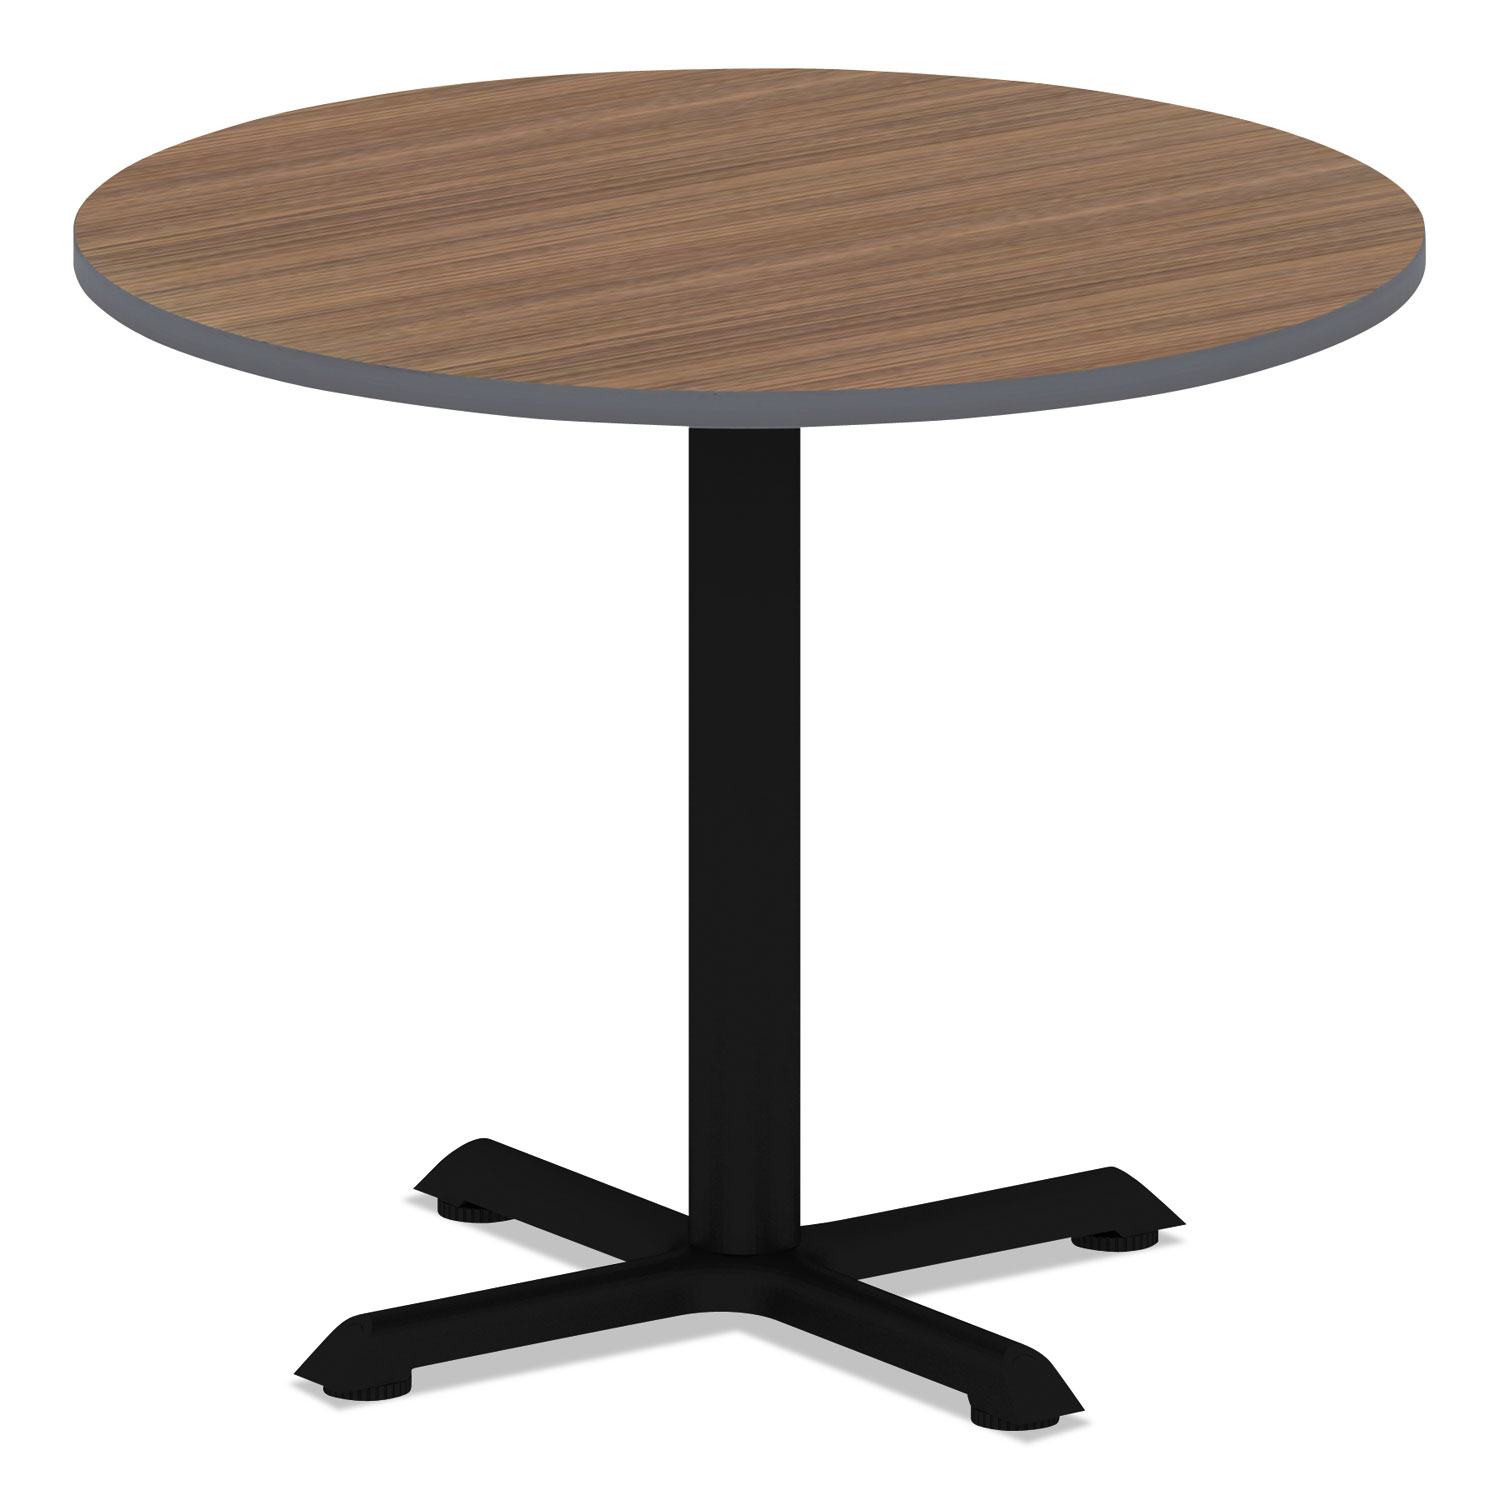  Alera ALETTRD36EW Reversible Laminate Table Top, Round, 35 3/8w x 35 3/8d, Espresso/Walnut (ALETTRD36EW) 